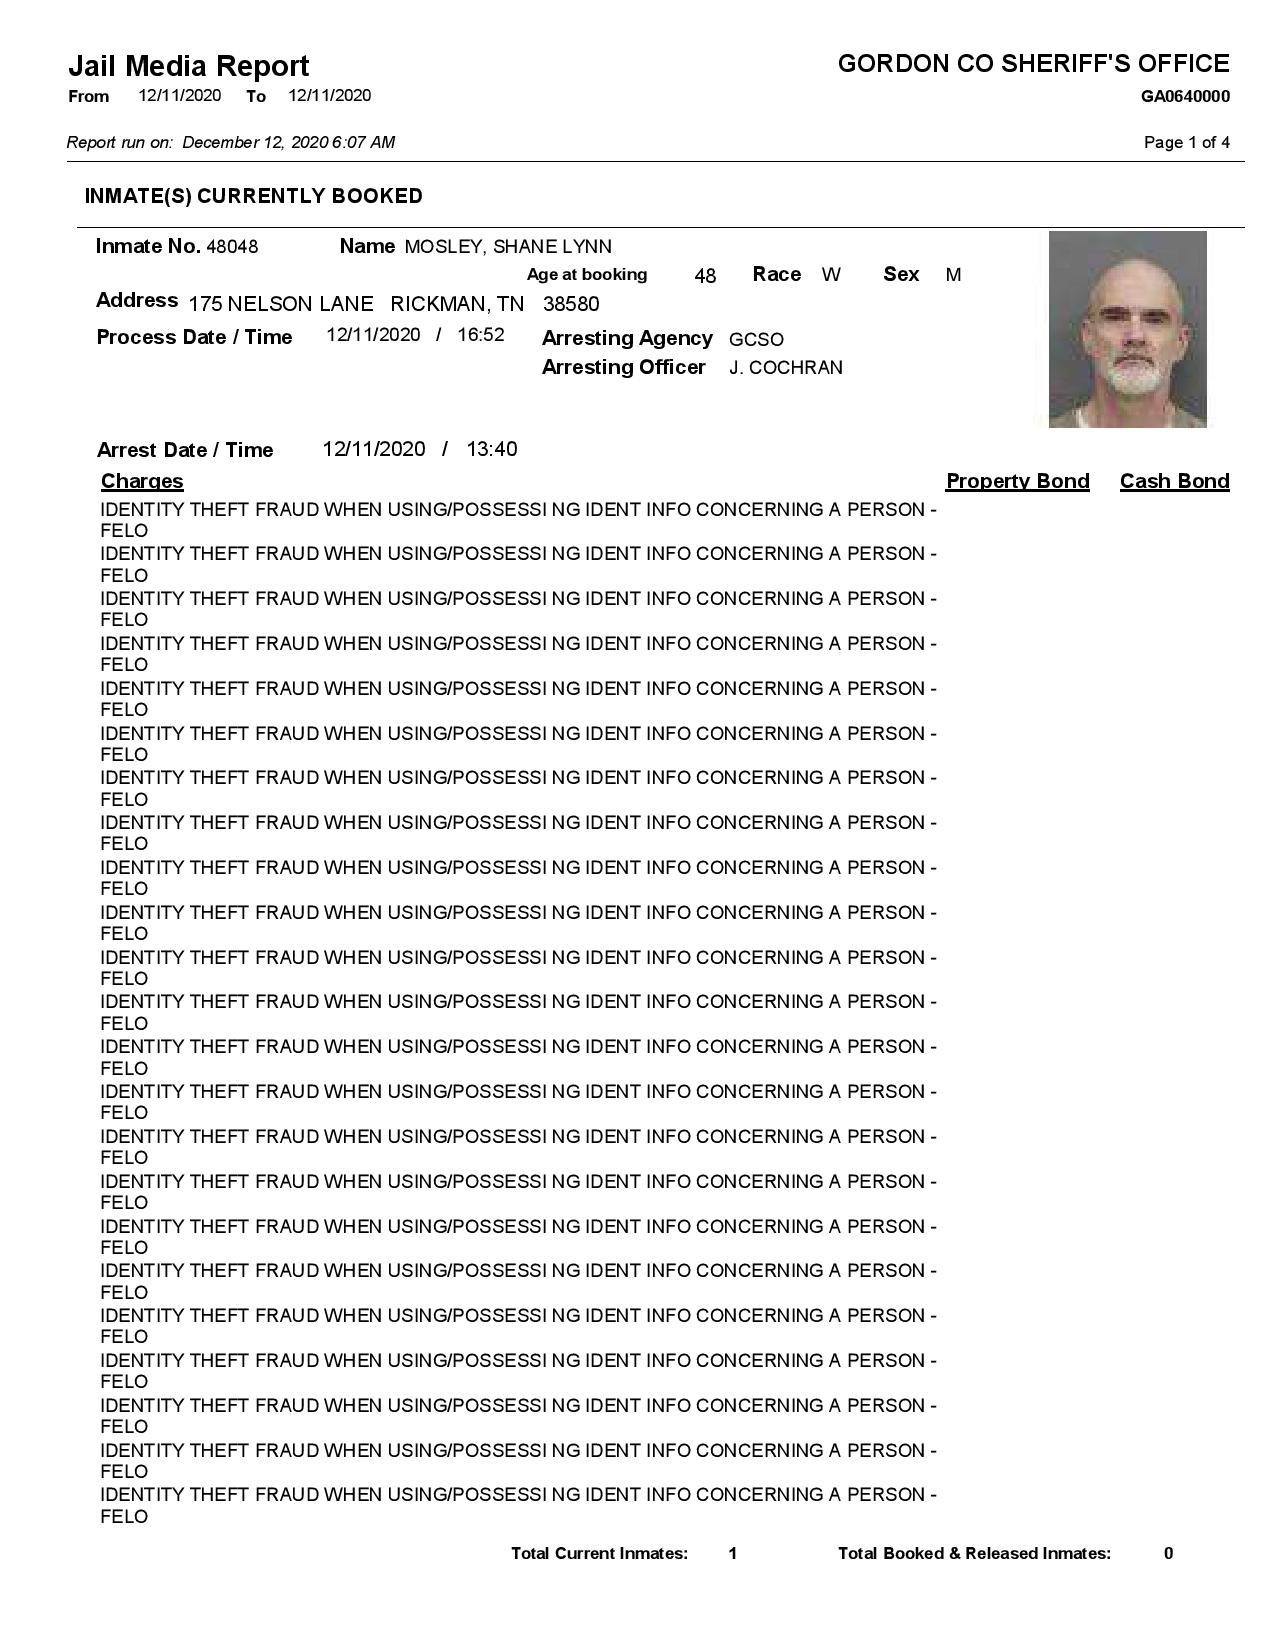 12.12.20 gordon_jail report-page-001